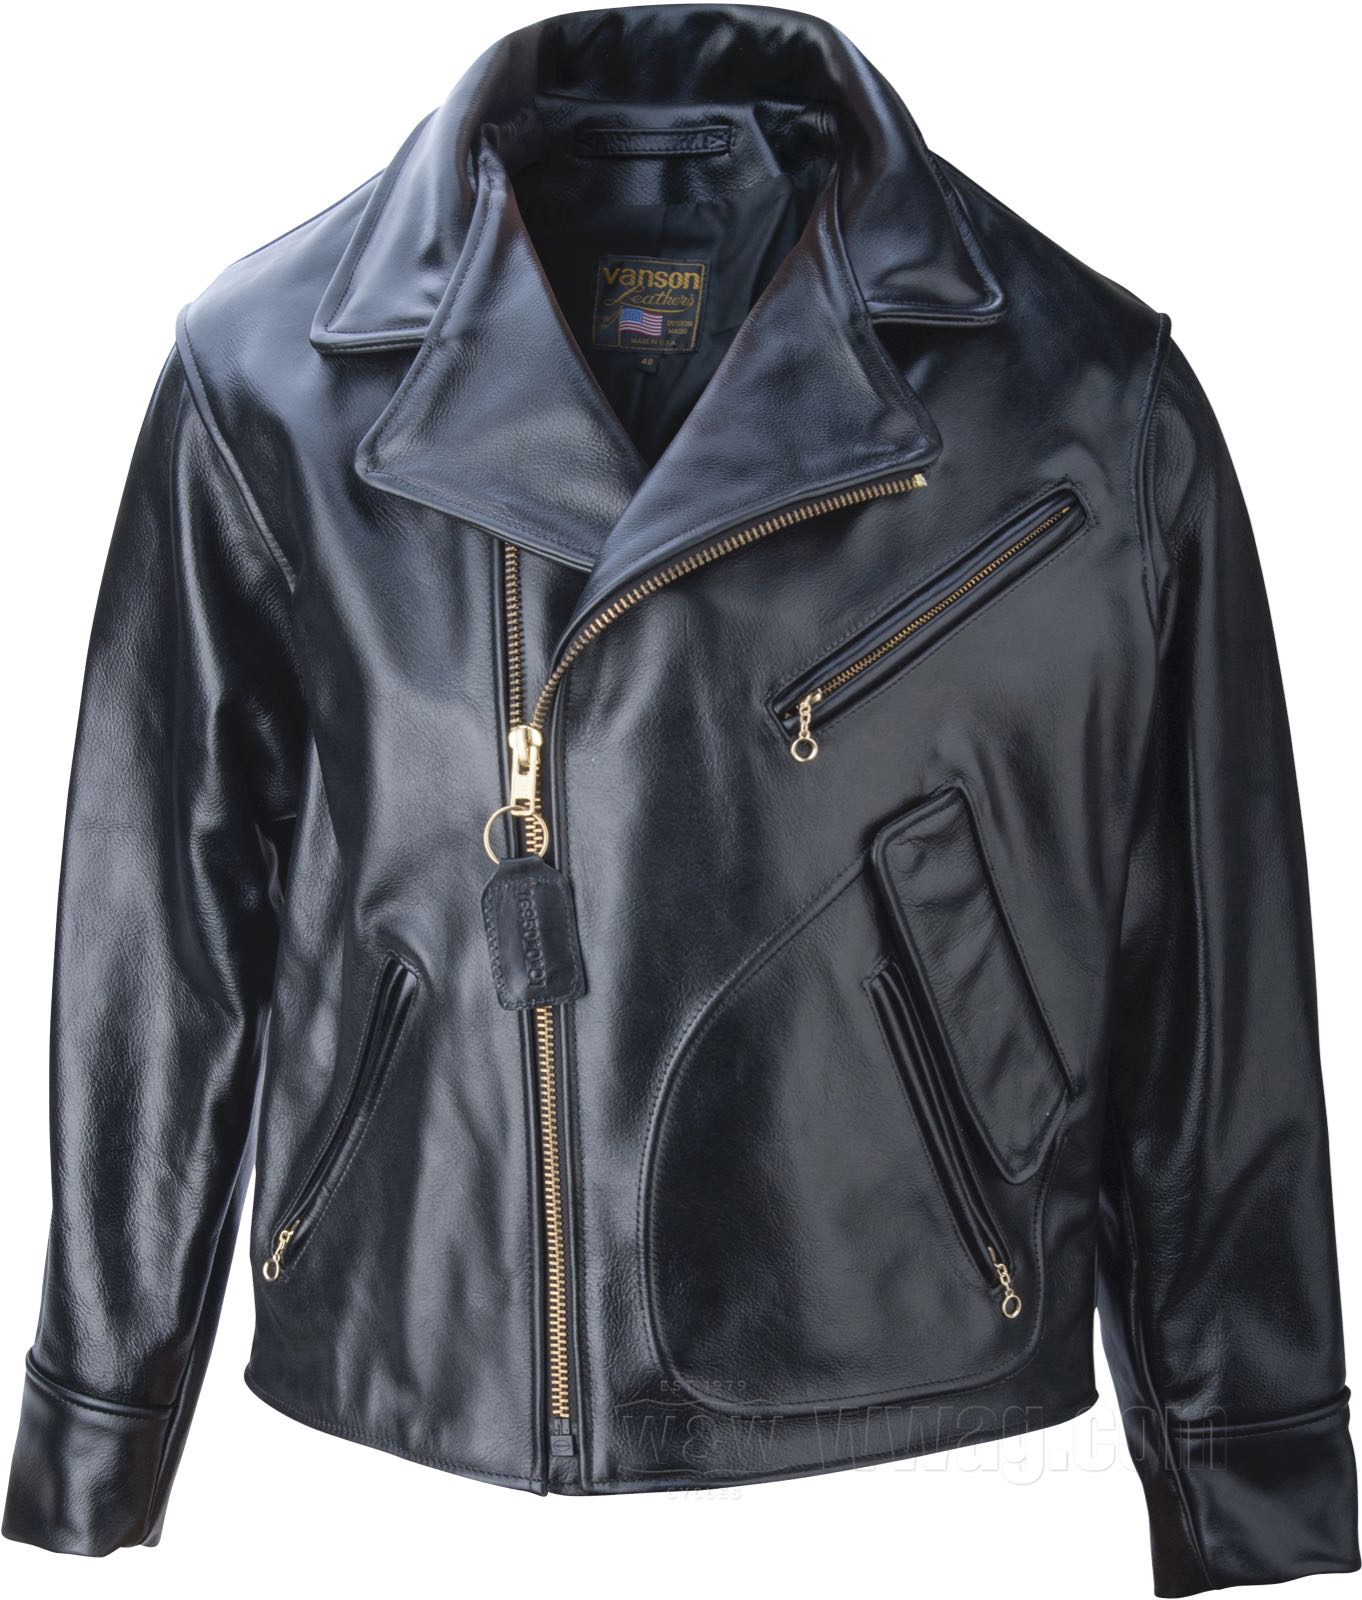 W&W Cycles - Vanson Raid Leather Jackets for Harley-Davidson